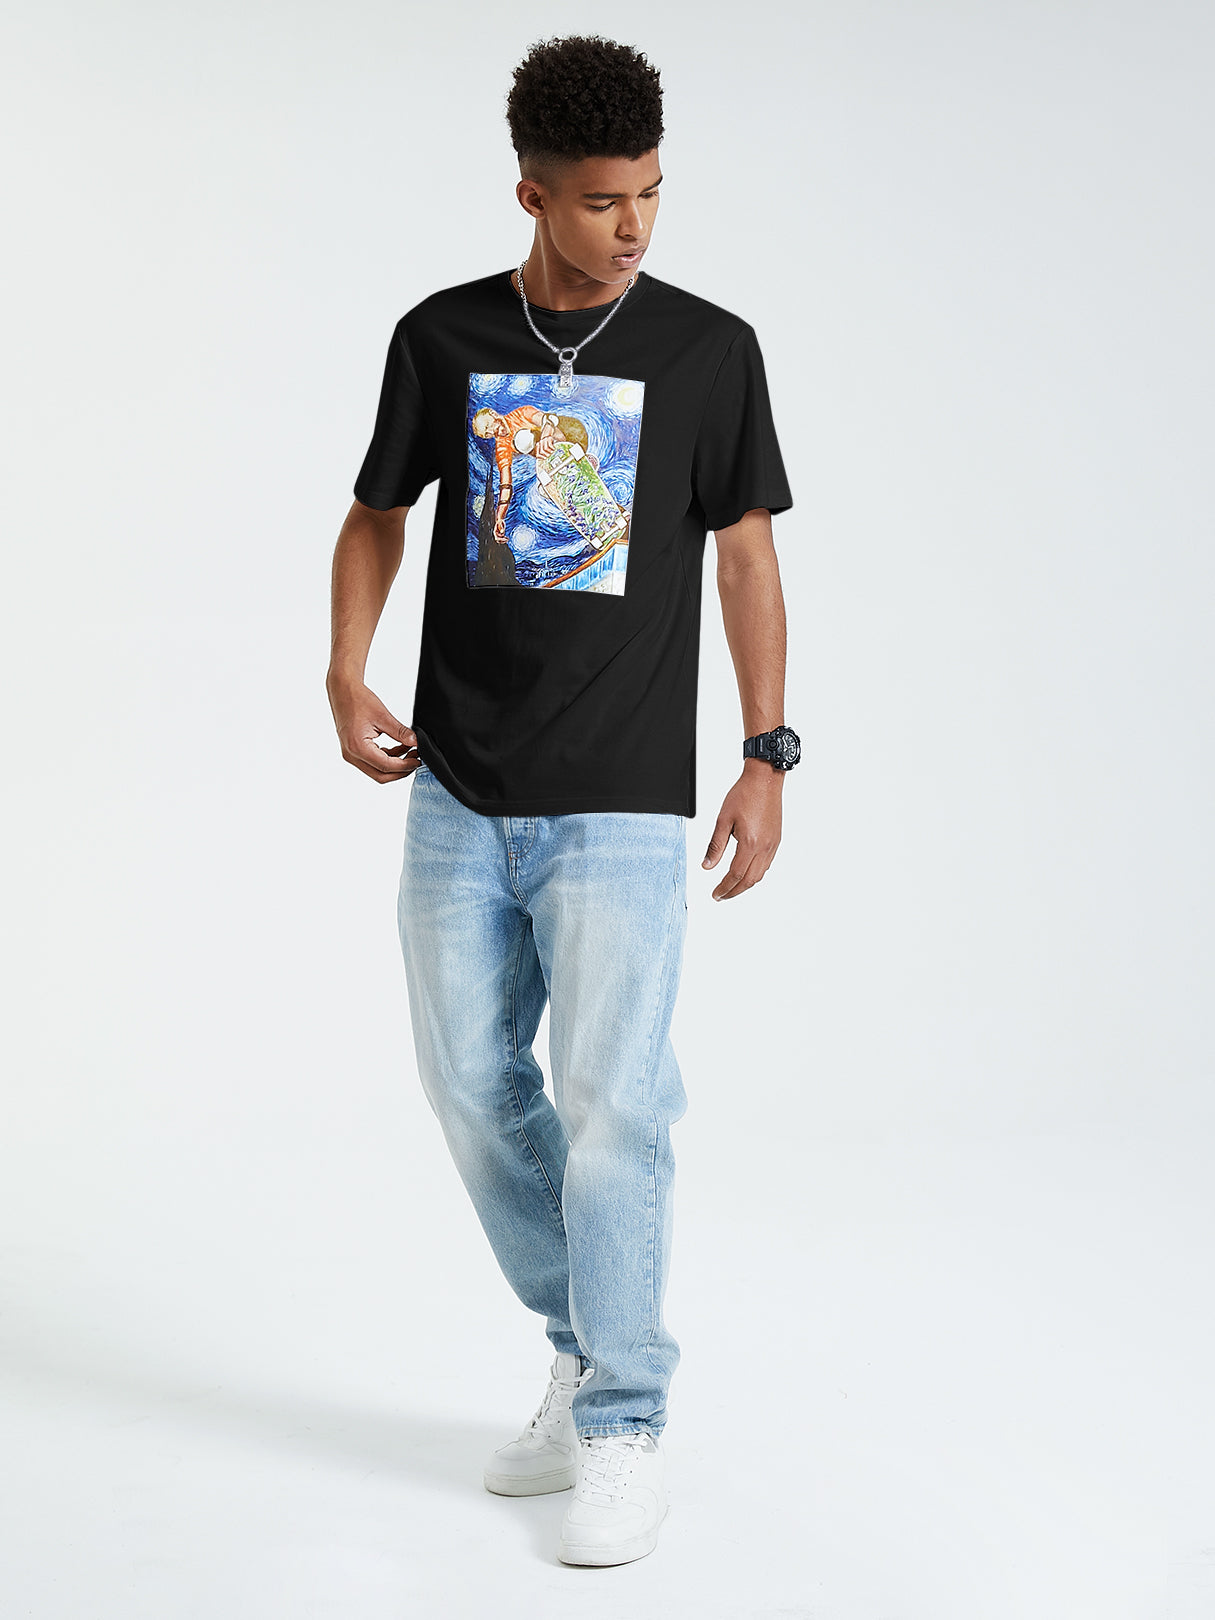 KOYYE Men Summer Graphic Figure Print T-Shirt